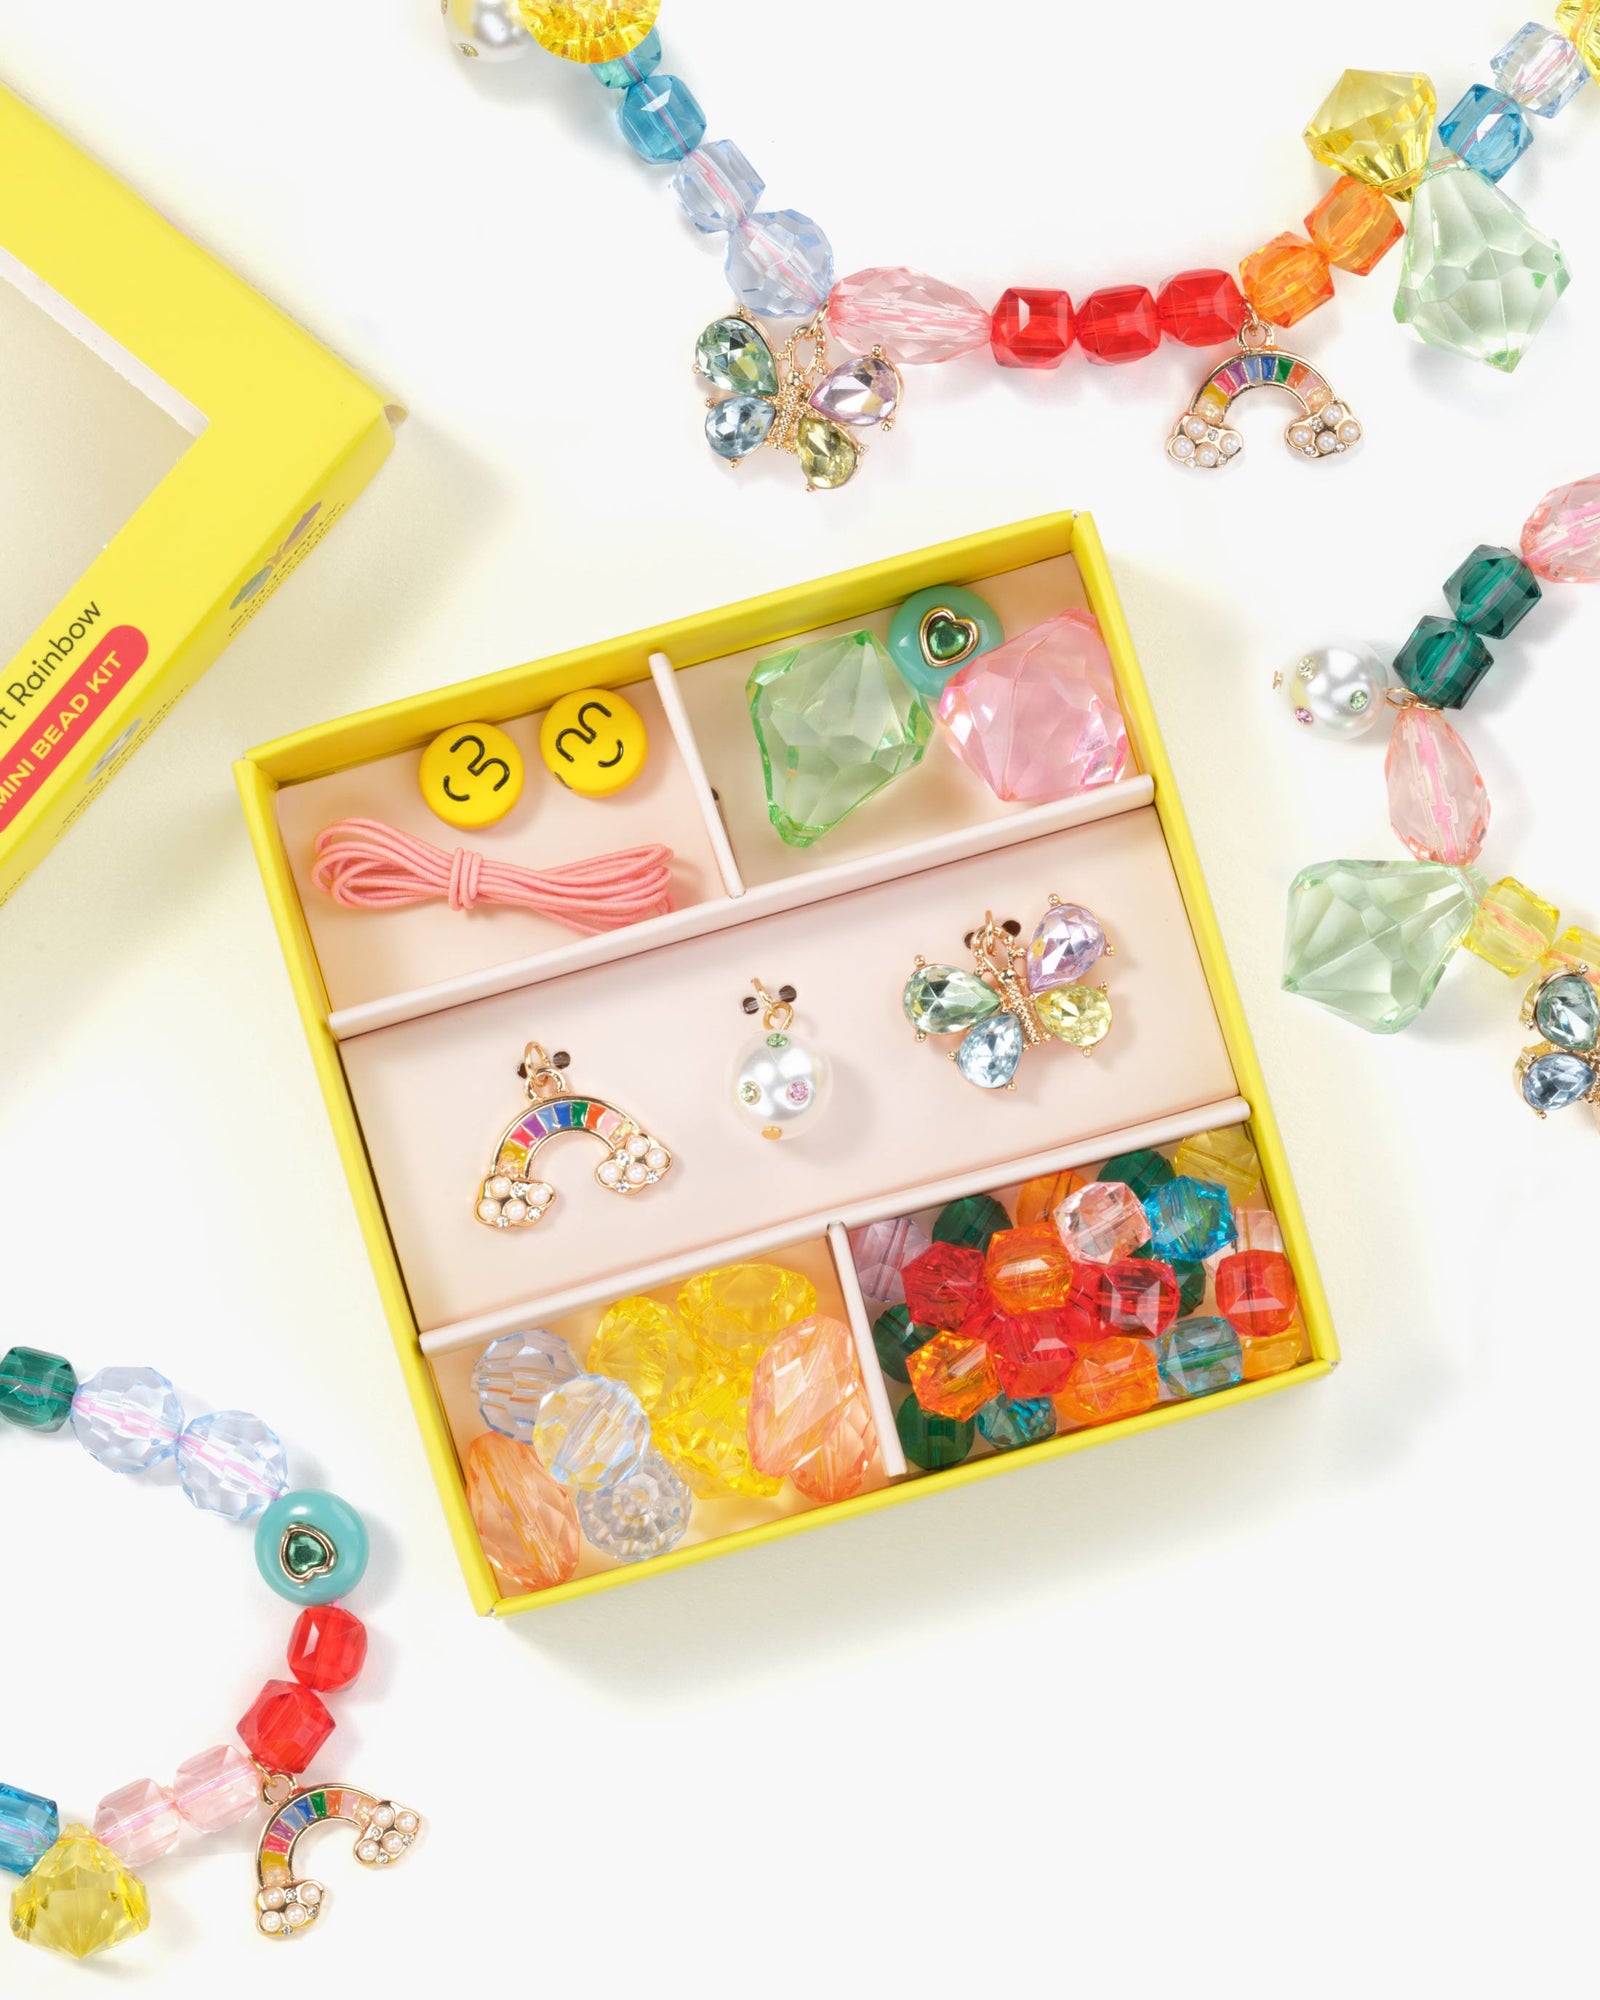 Make It Real Rainbow Dream Jewelry Kit